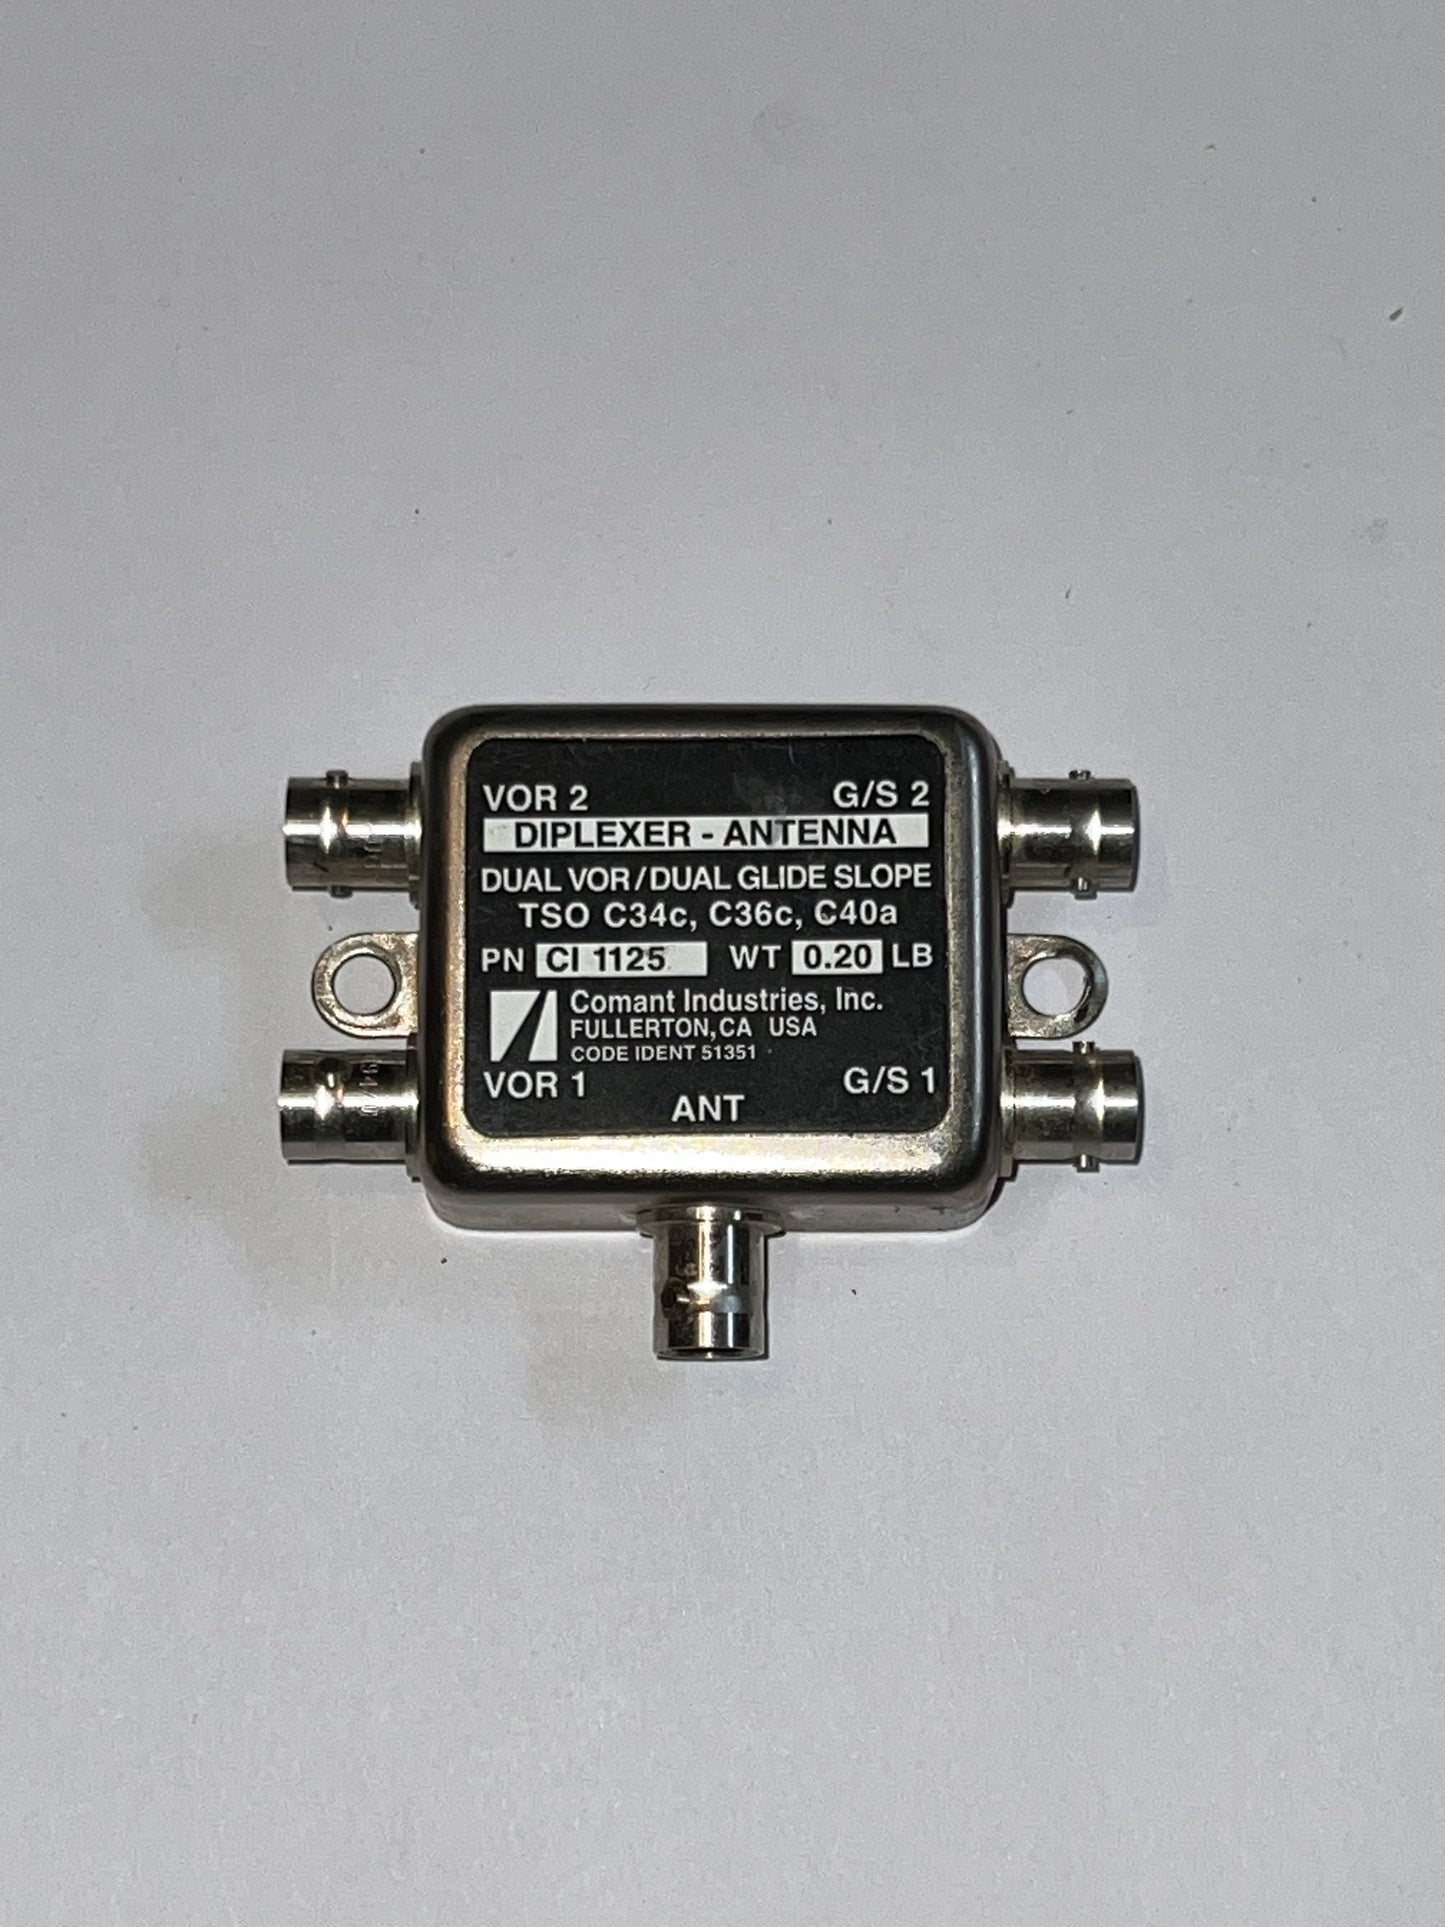 Diaplexer Antenna P/N CI 1125